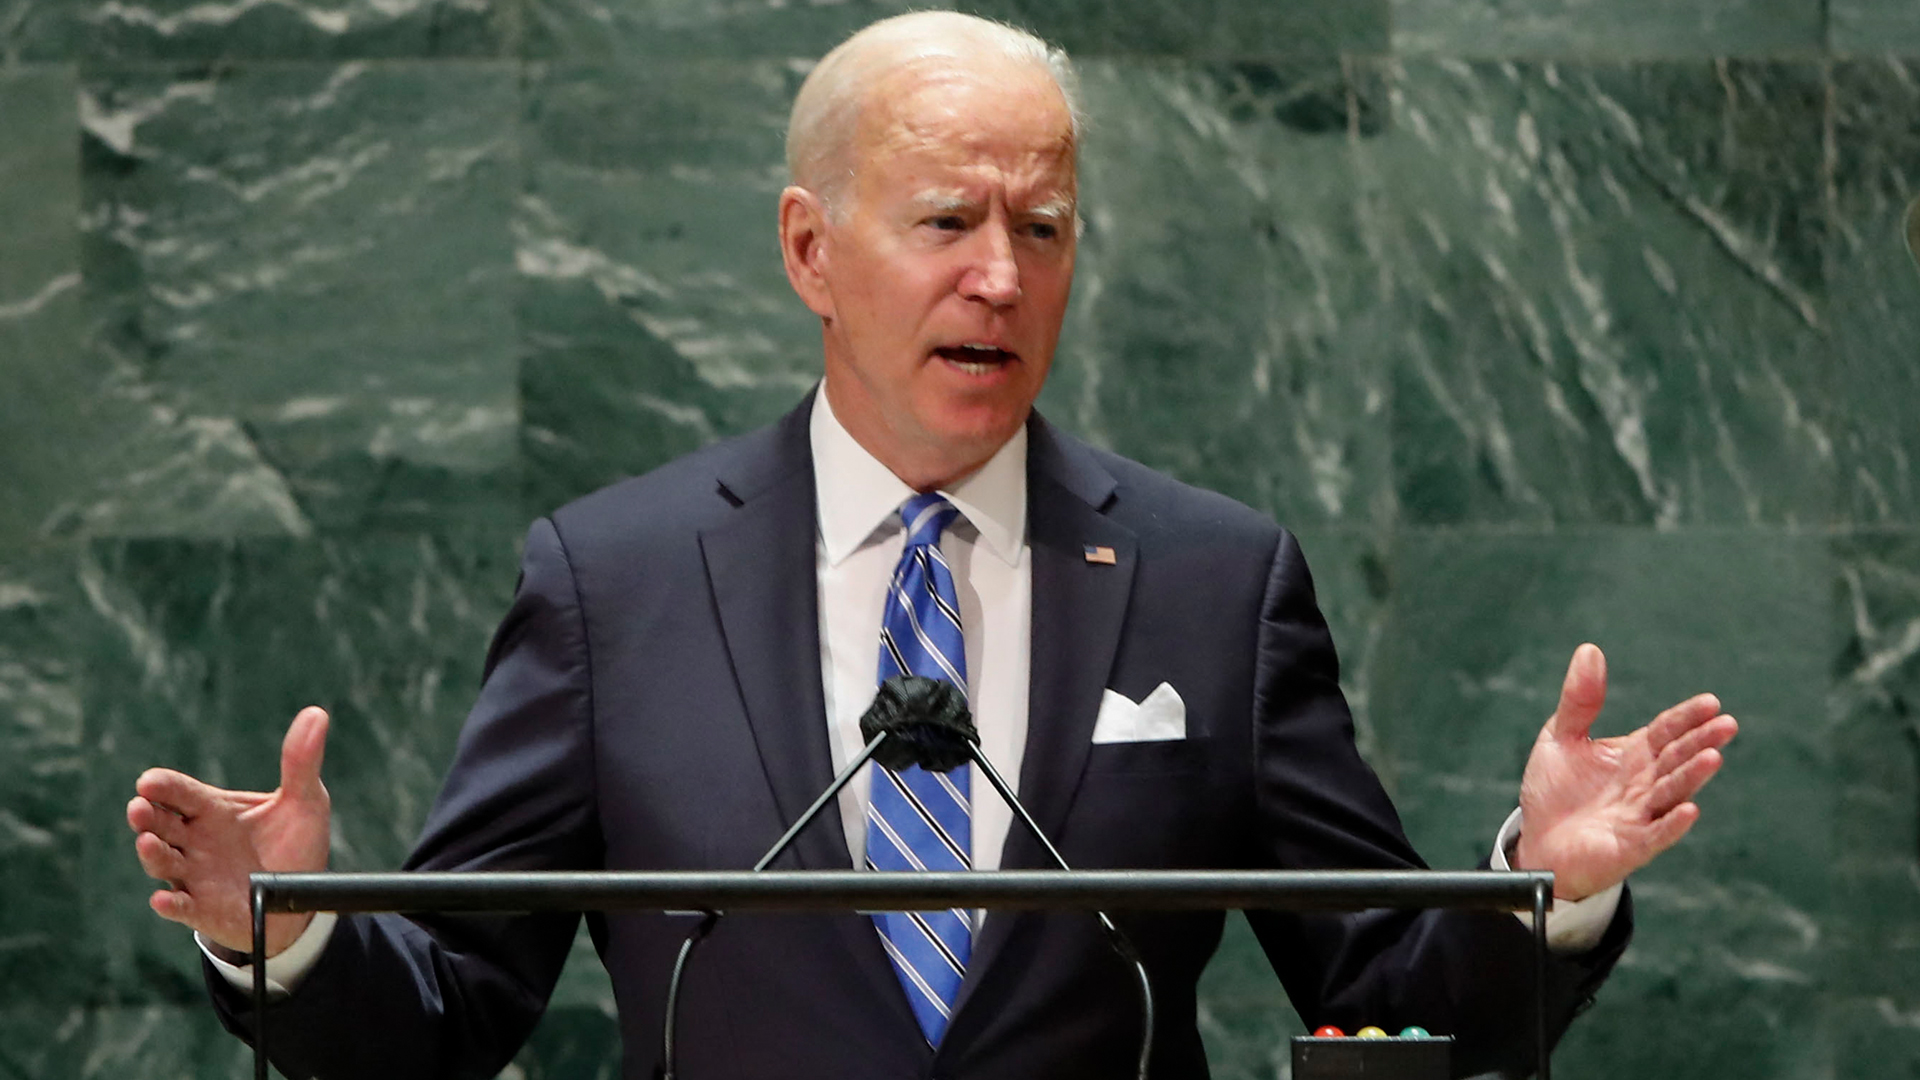 Biden at UN general debate: “We don’t want a new cold war”